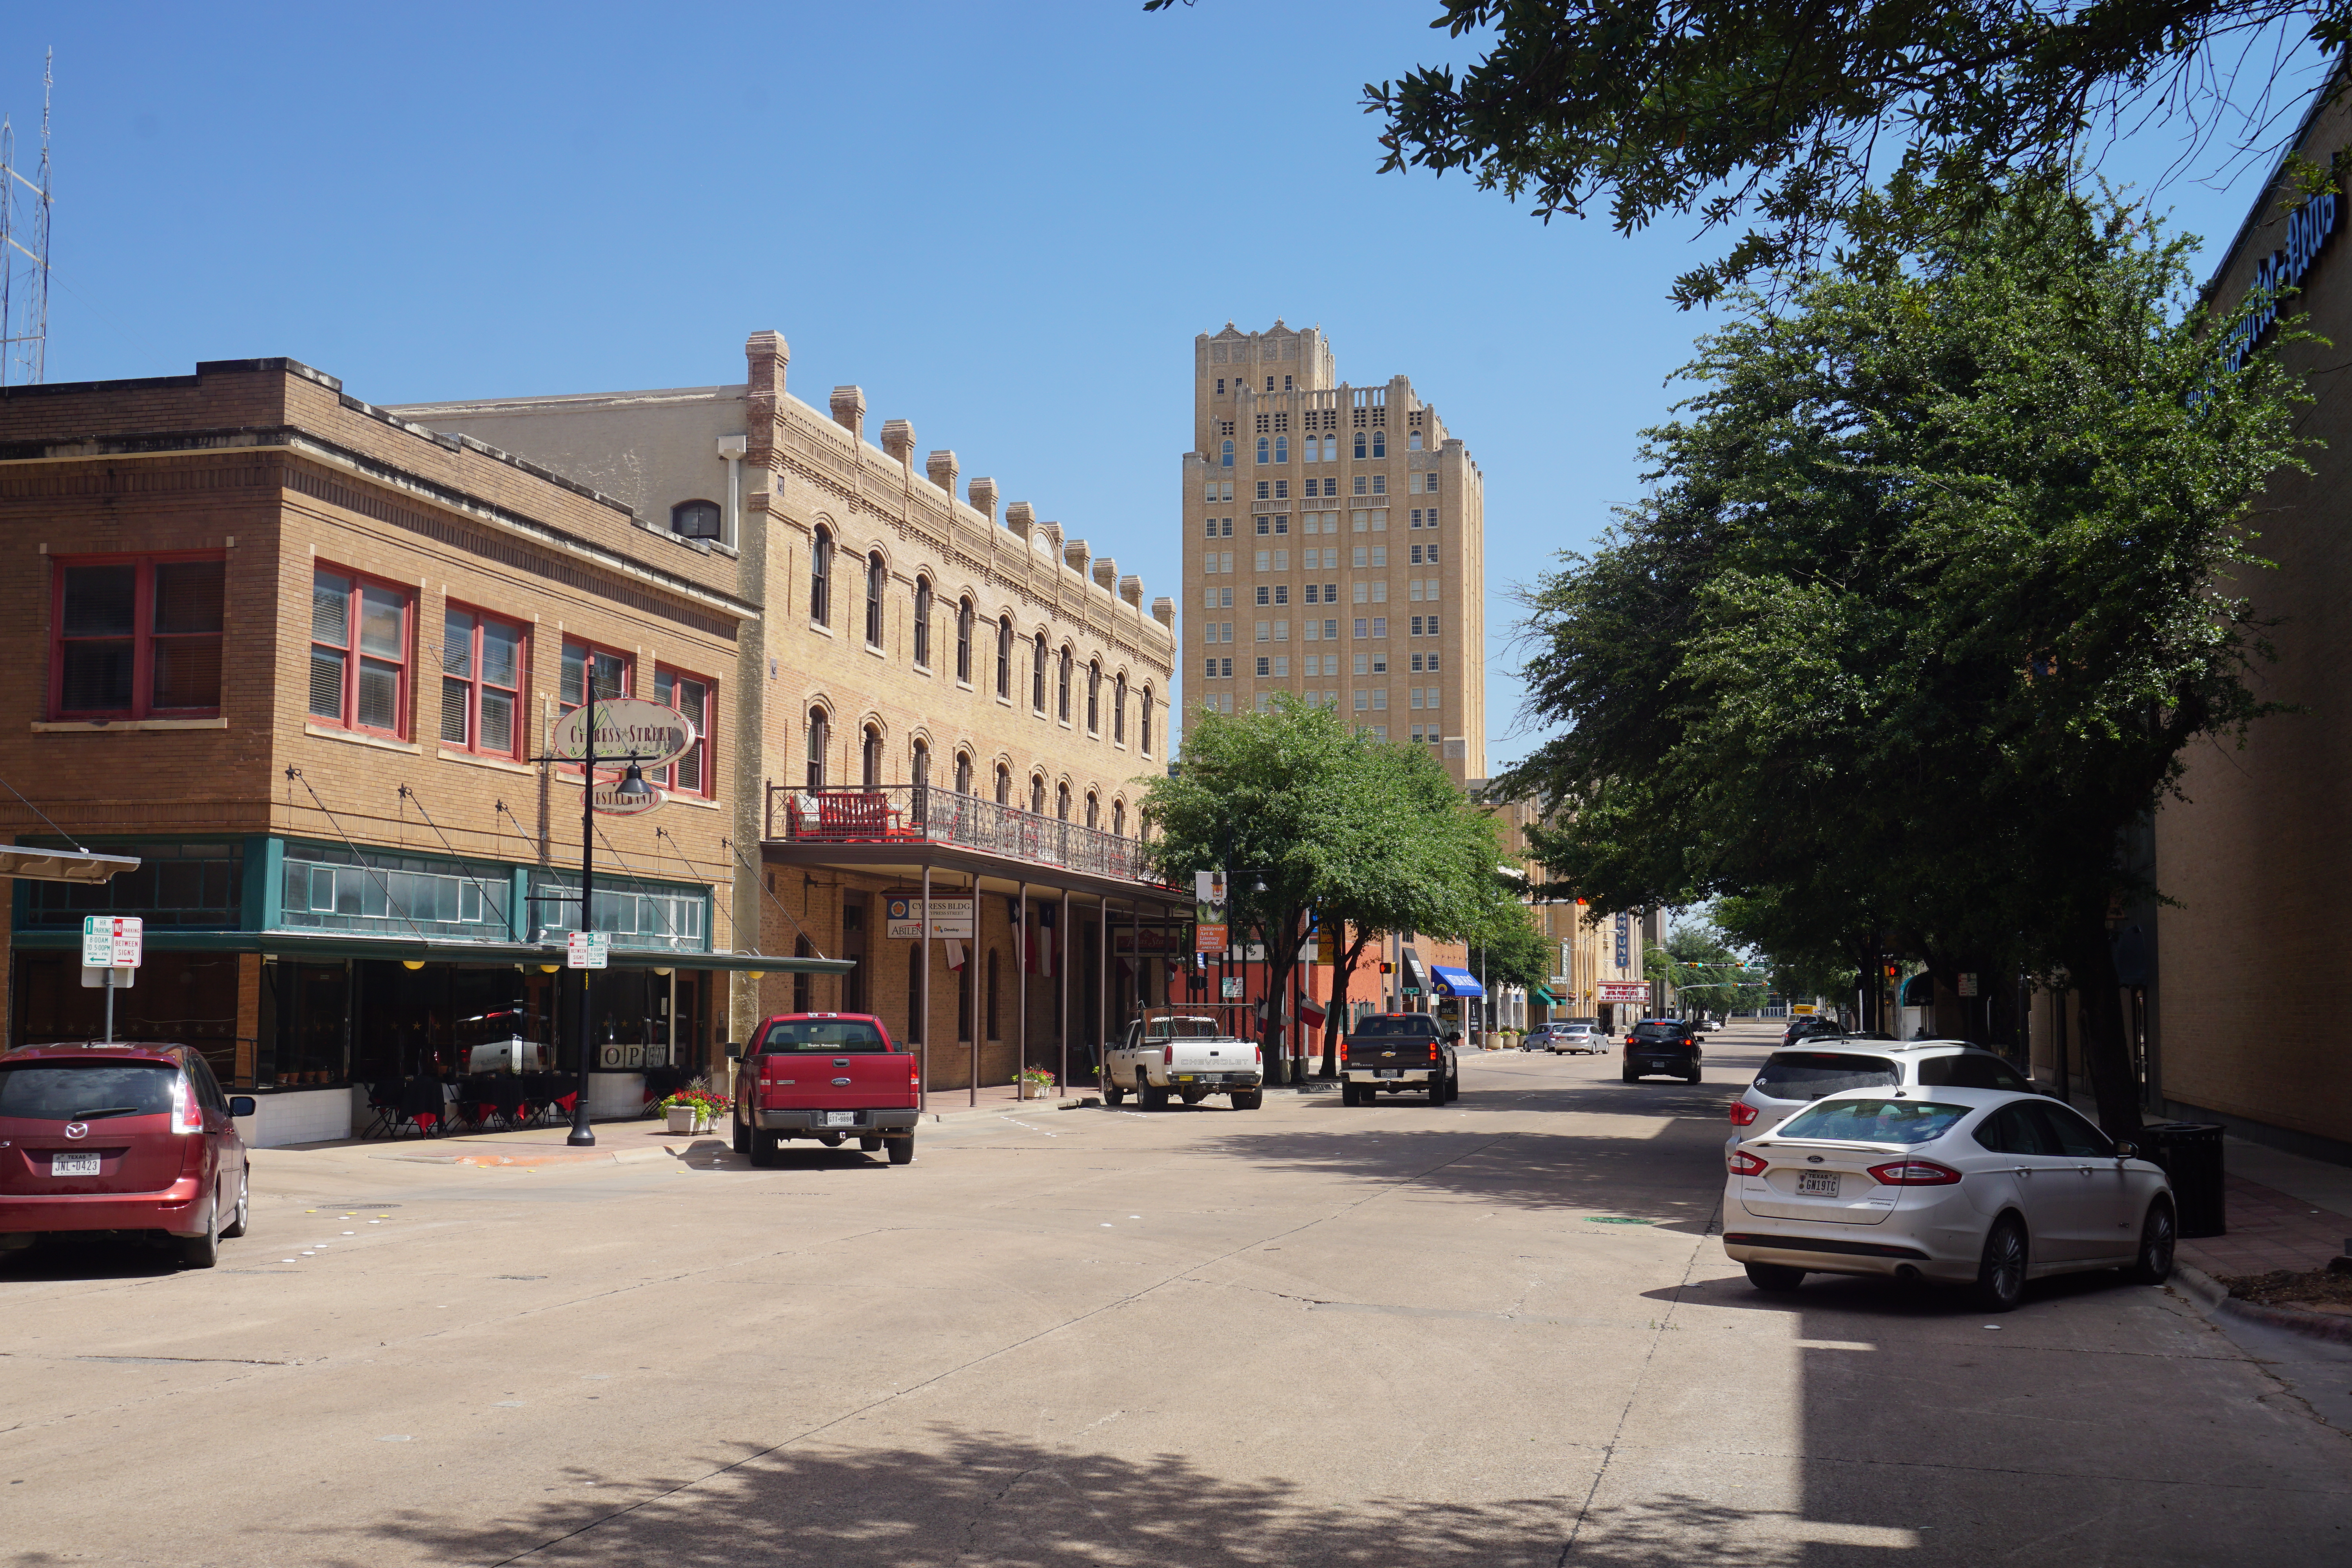 Buildings in Abilene, Texas.